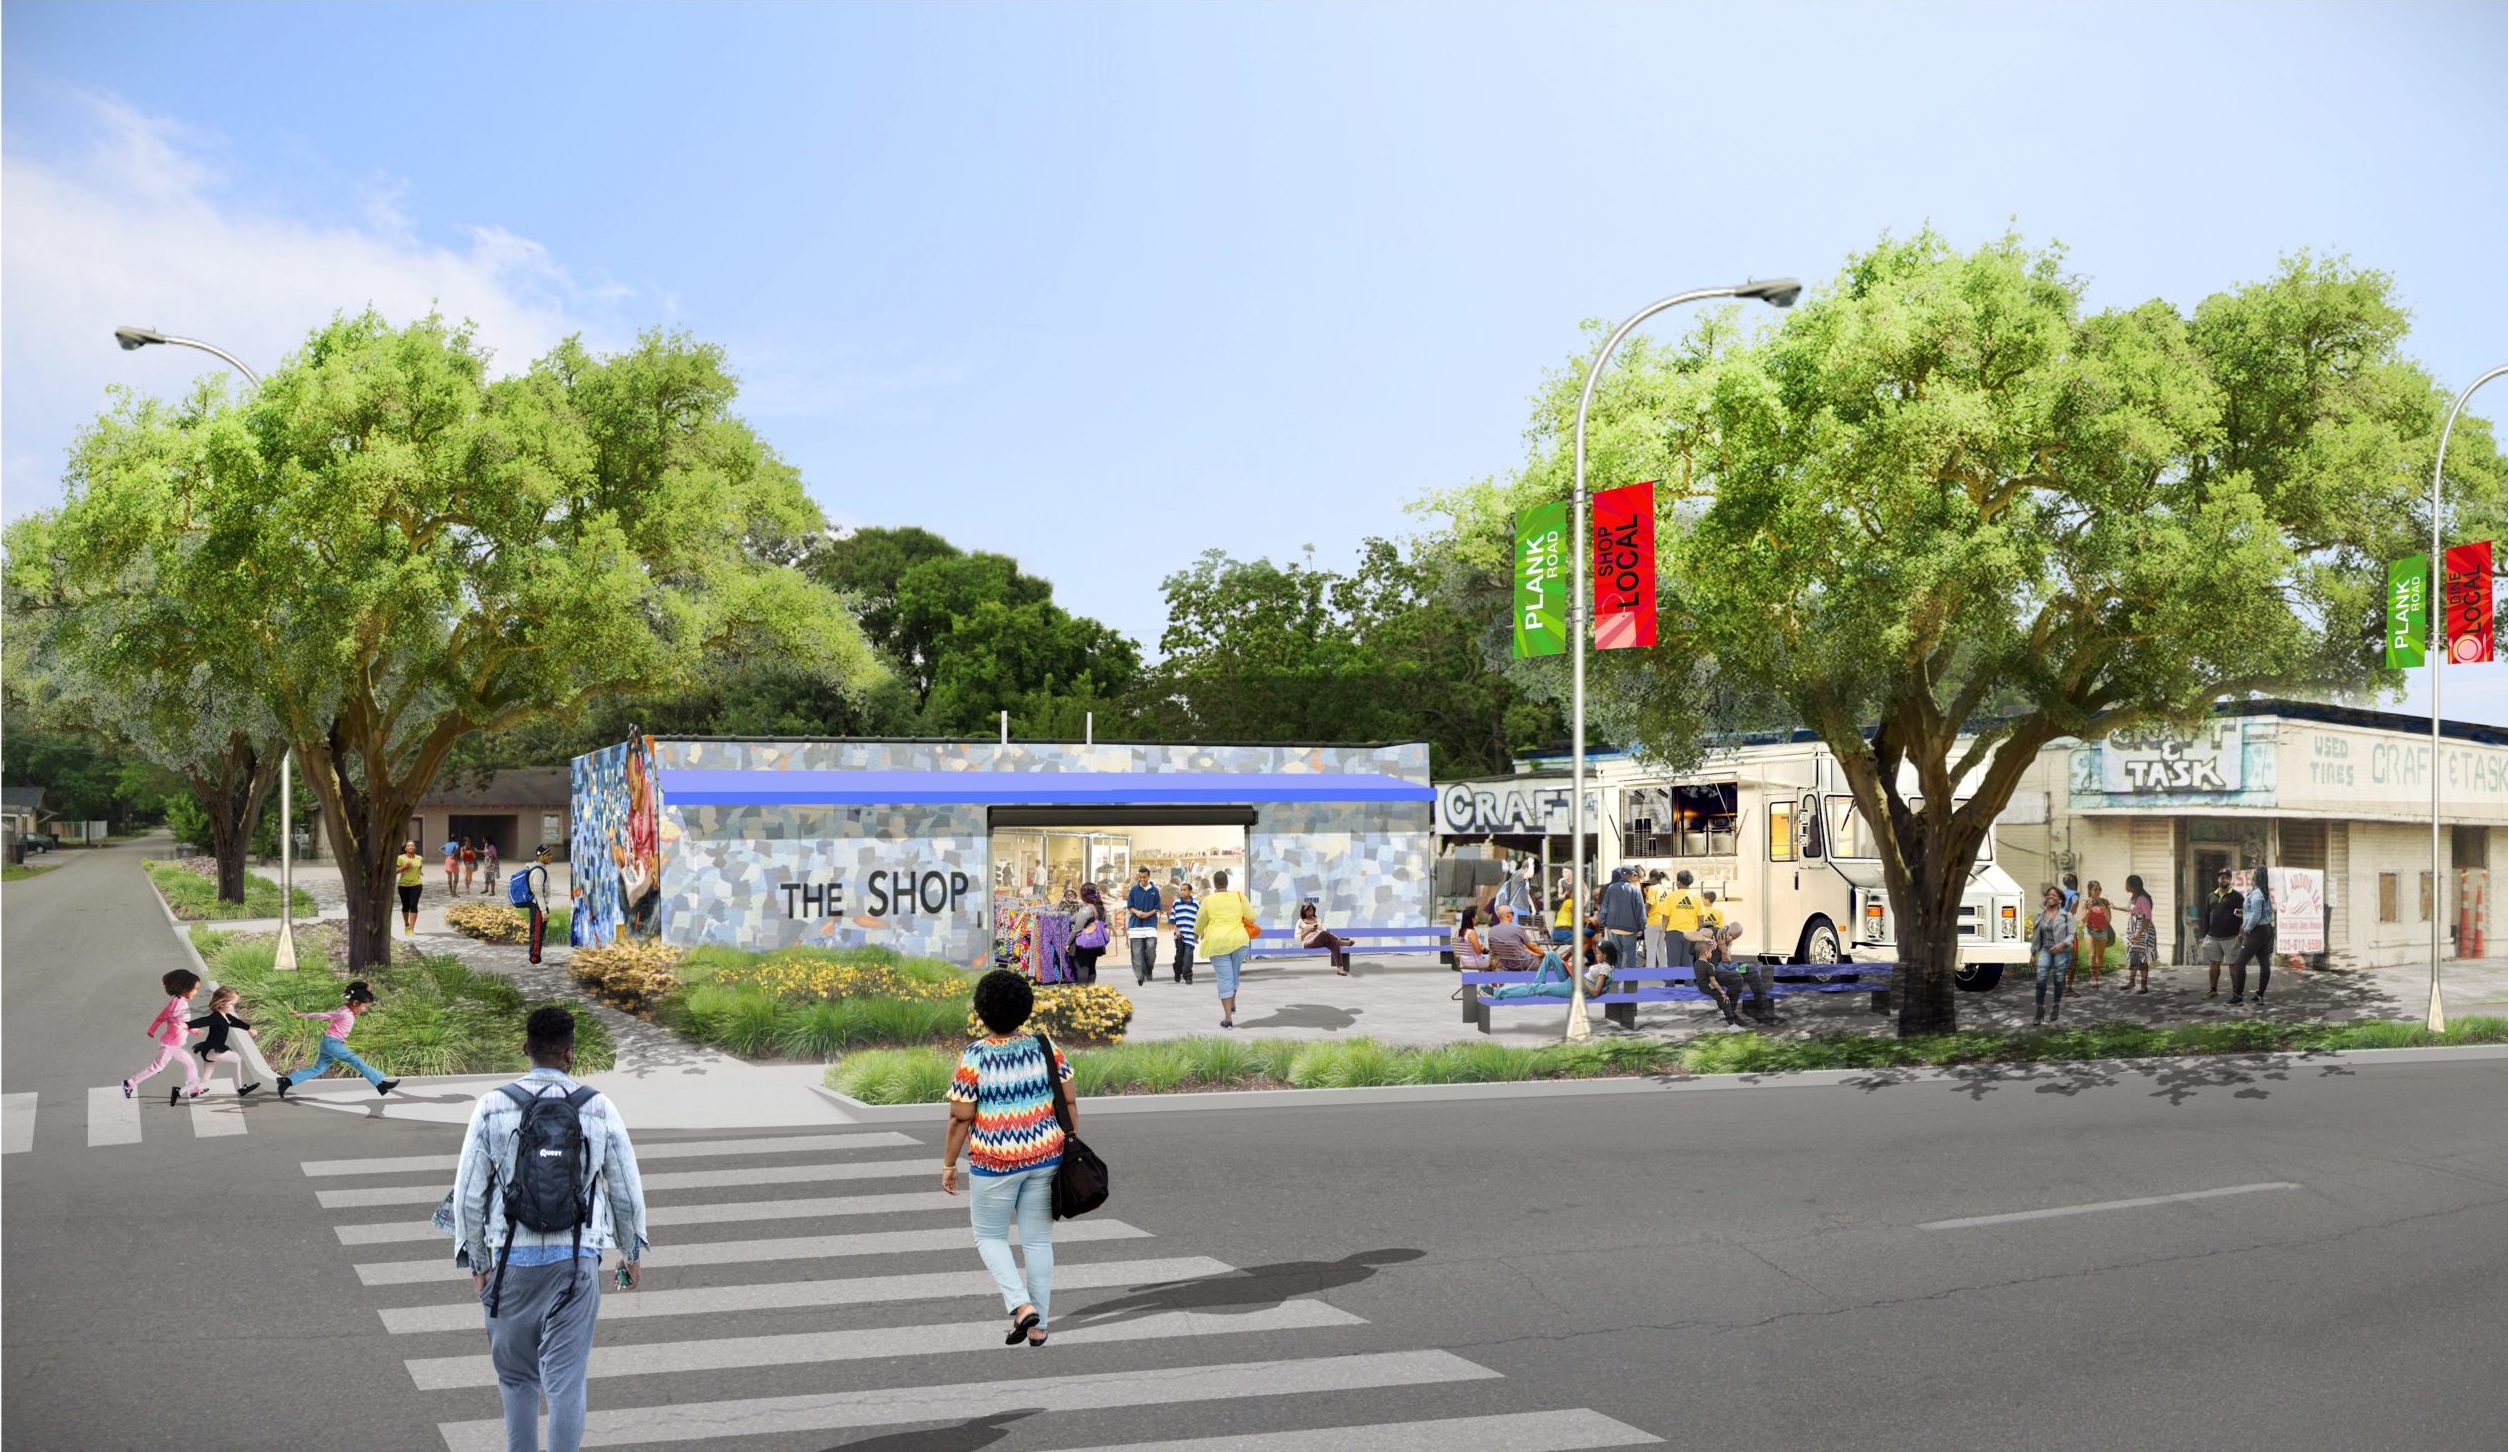 Imagine Plank Road establishes a vision for equitable transit oriented development